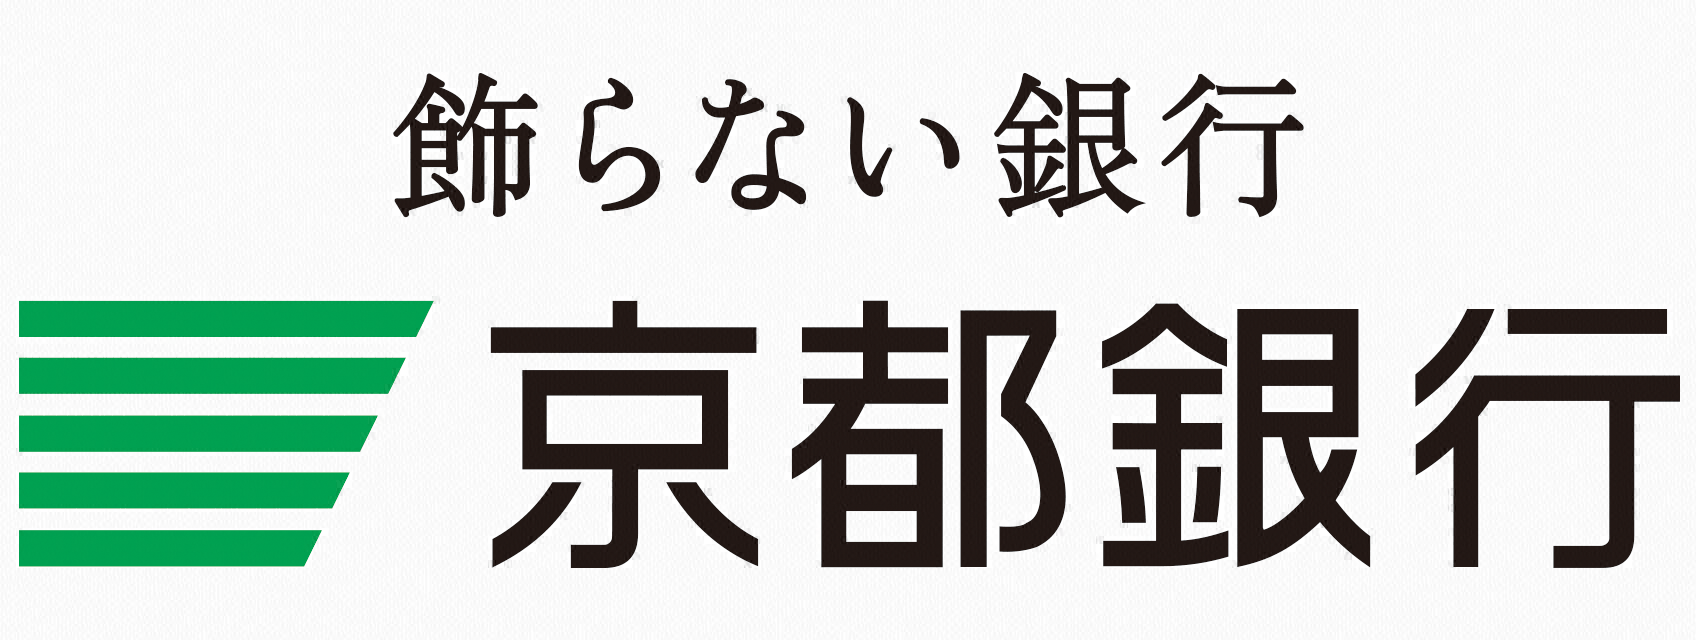 Bank of Kyoto Brand Logo